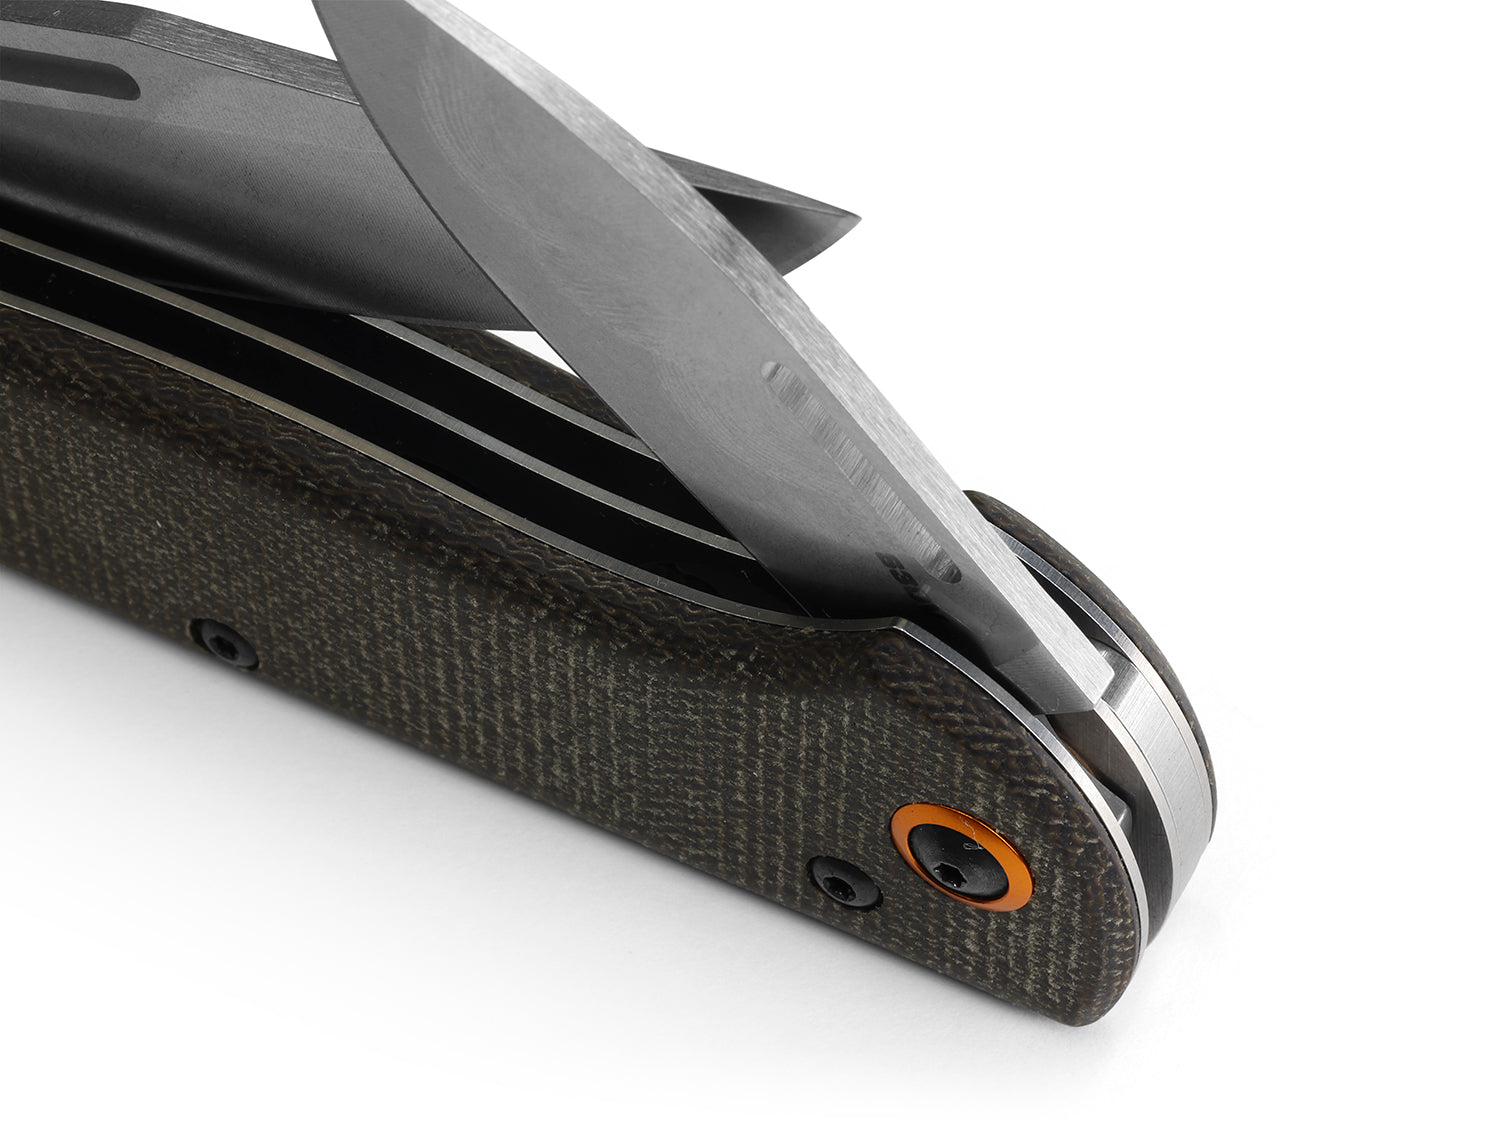 Benchmade 317-1 Weekender Pocket Knife with Manual Knife Sharpener &  Flashlight in Green - Yahoo Shopping